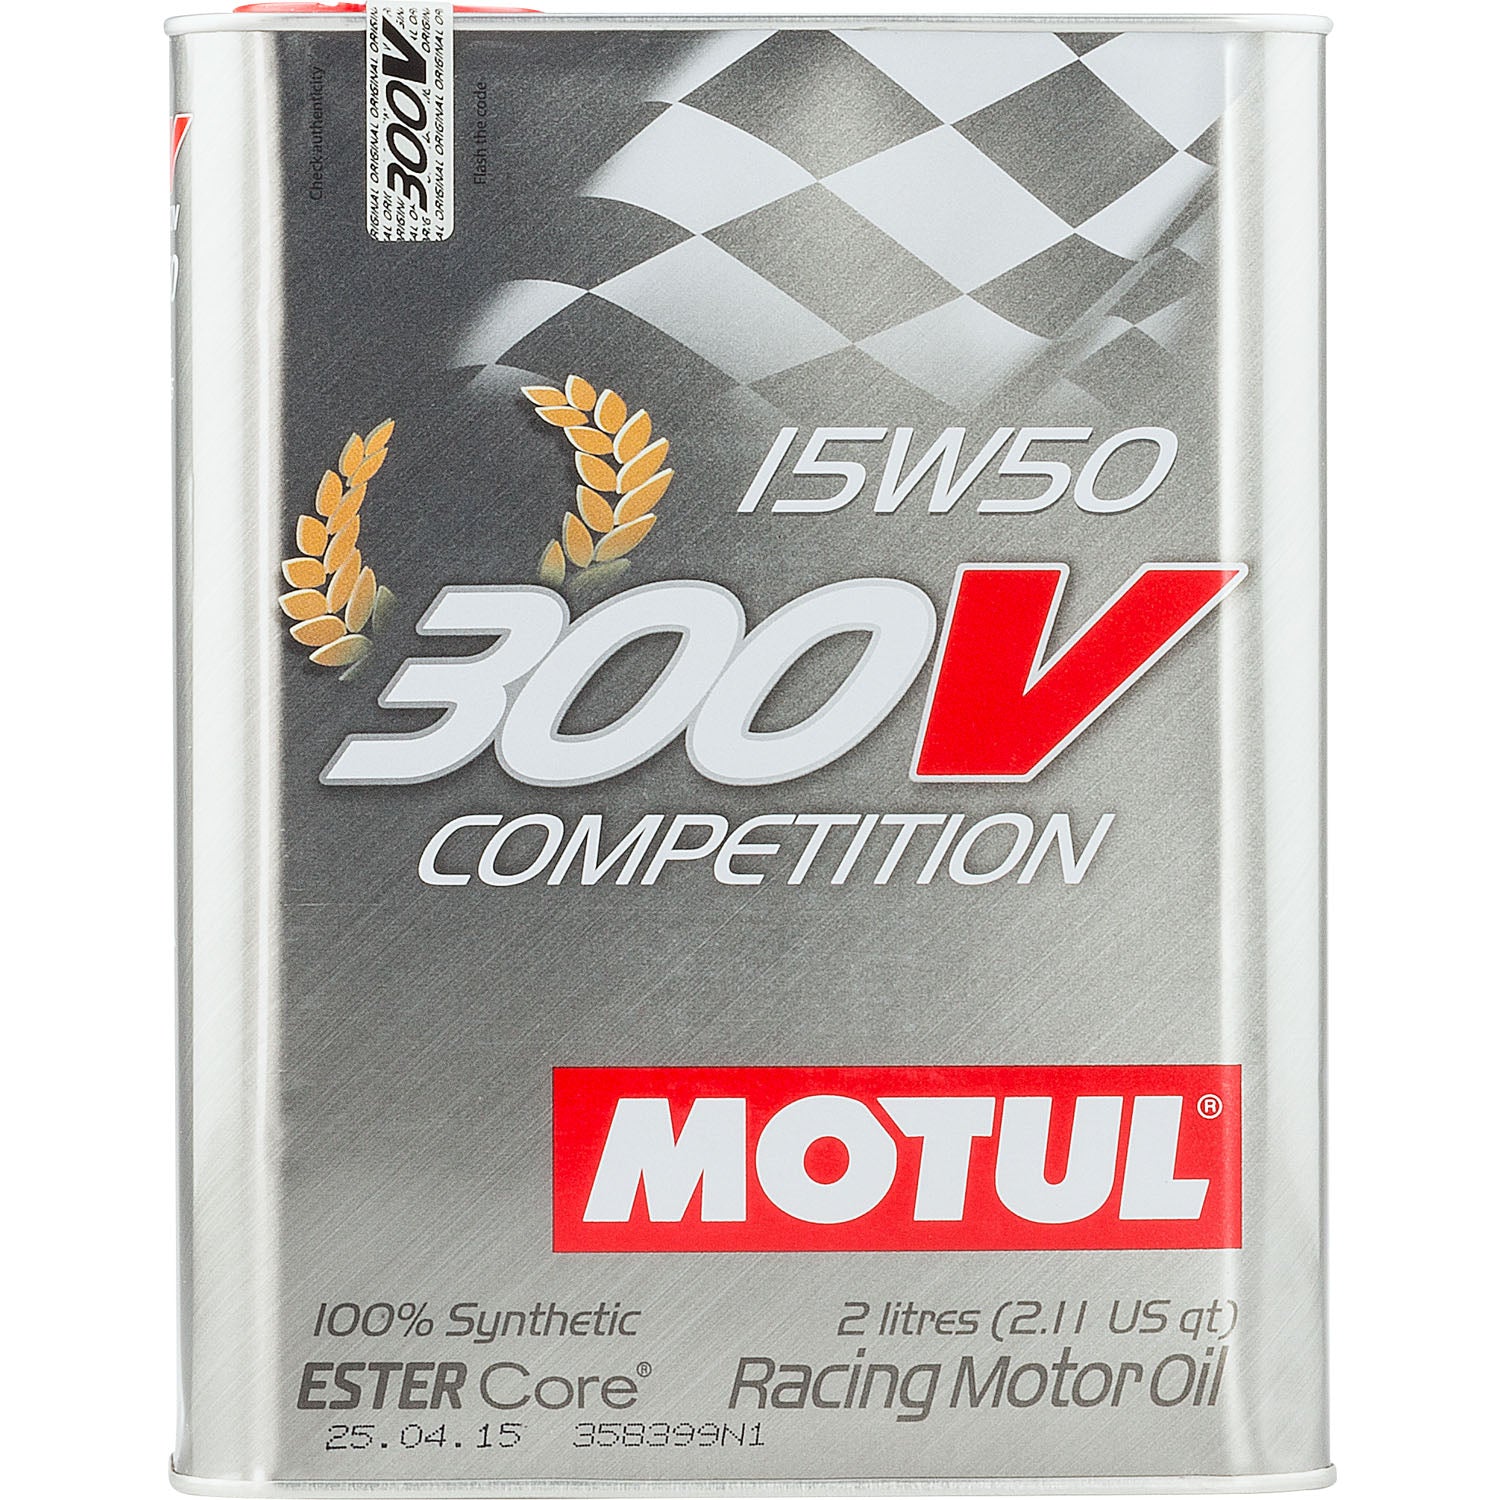 Motul 300V Competition Racing Motor Oil 15W50 - 2 Liter